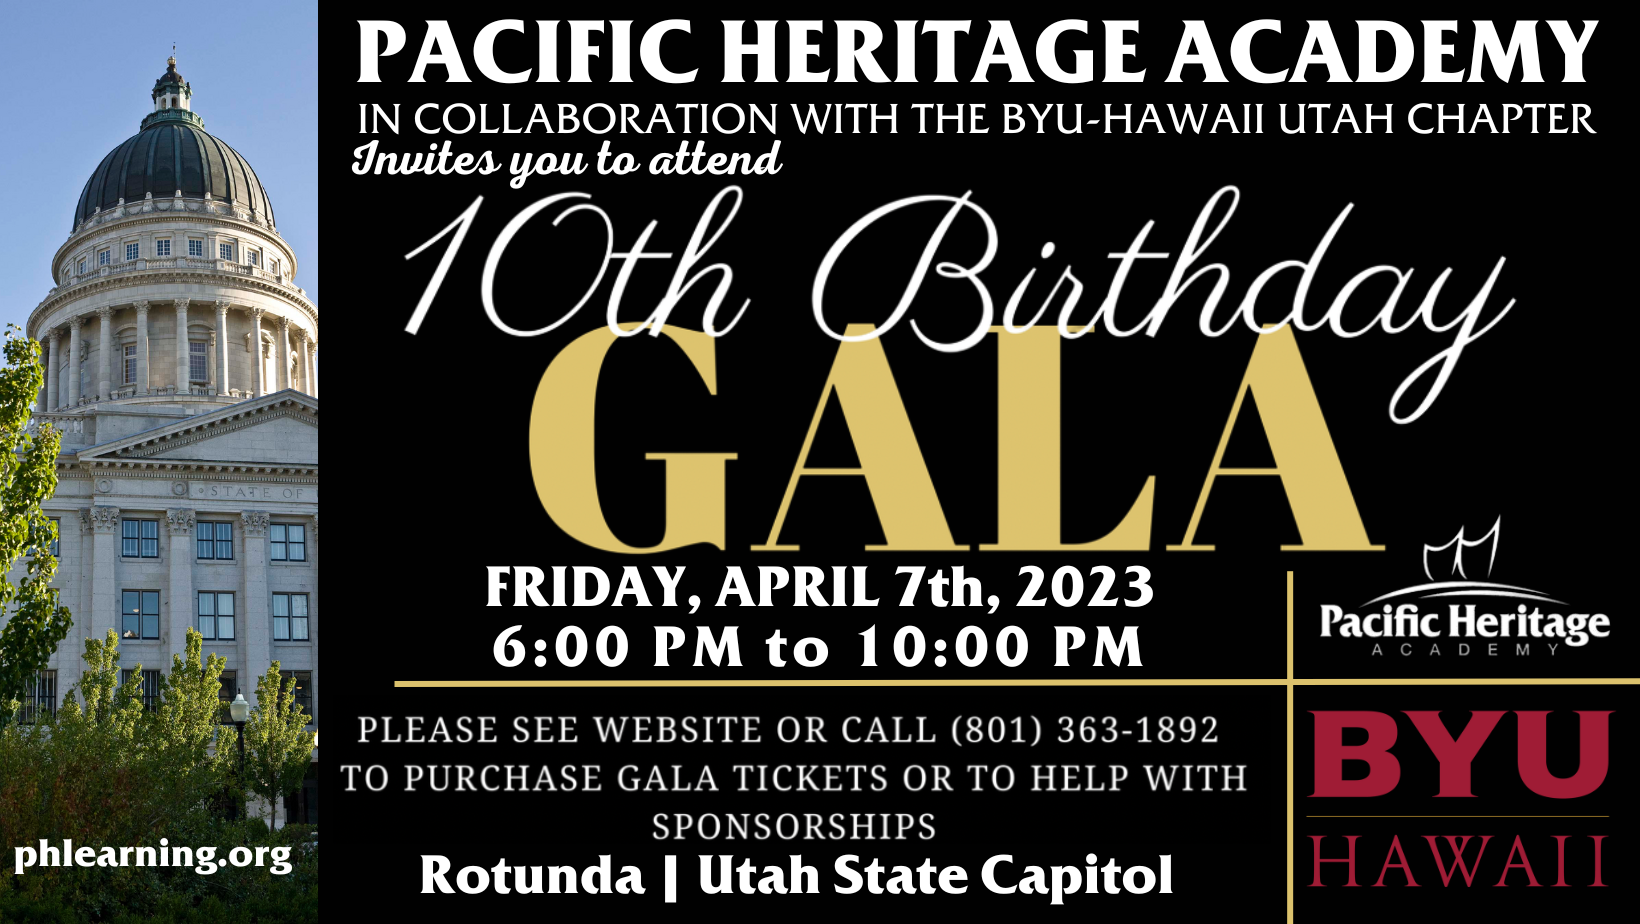 Pacific Heritage Academy’s 10th Birthday Gala Fundraiser